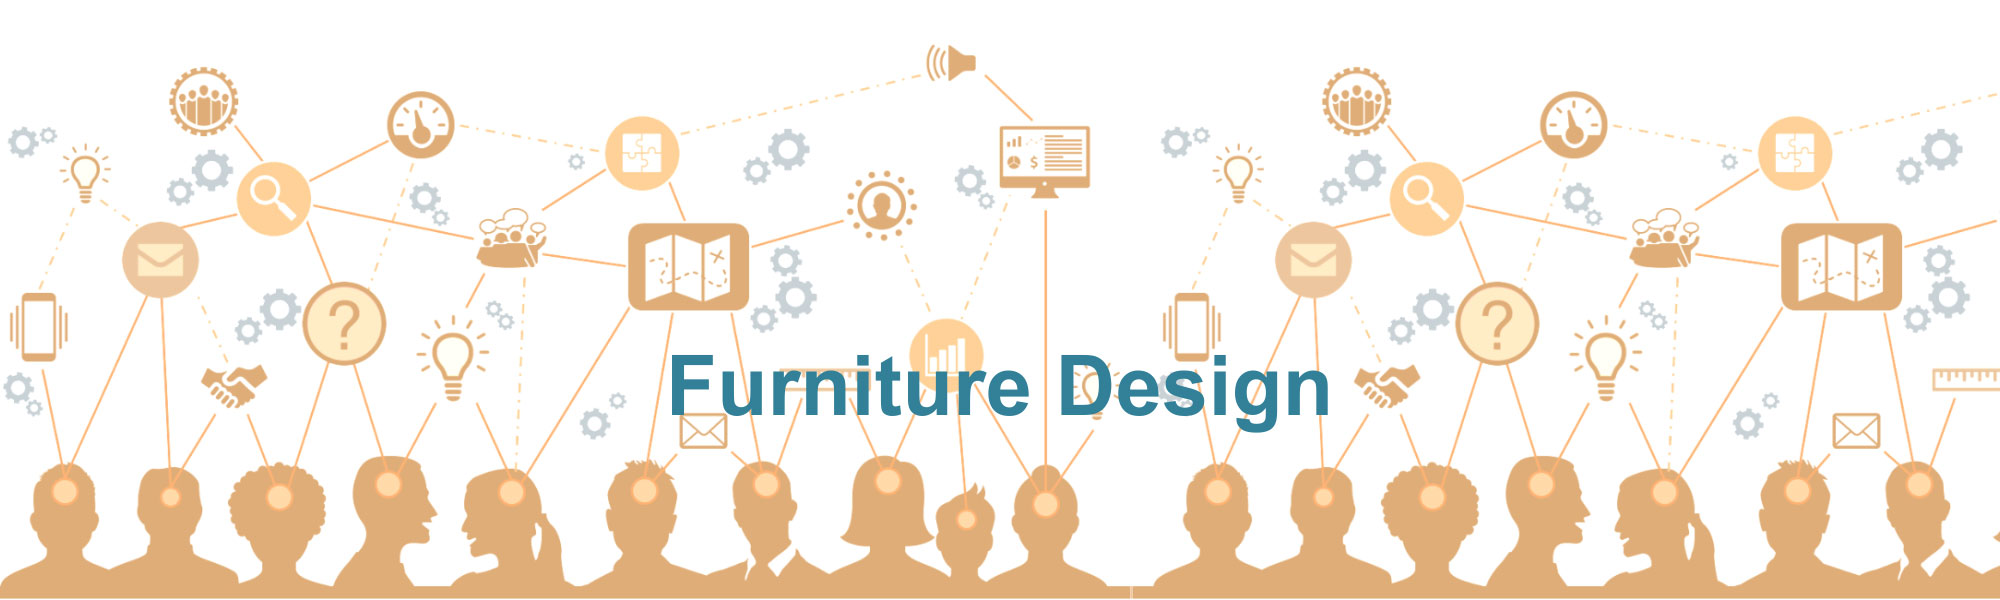 Furniture Design for Office